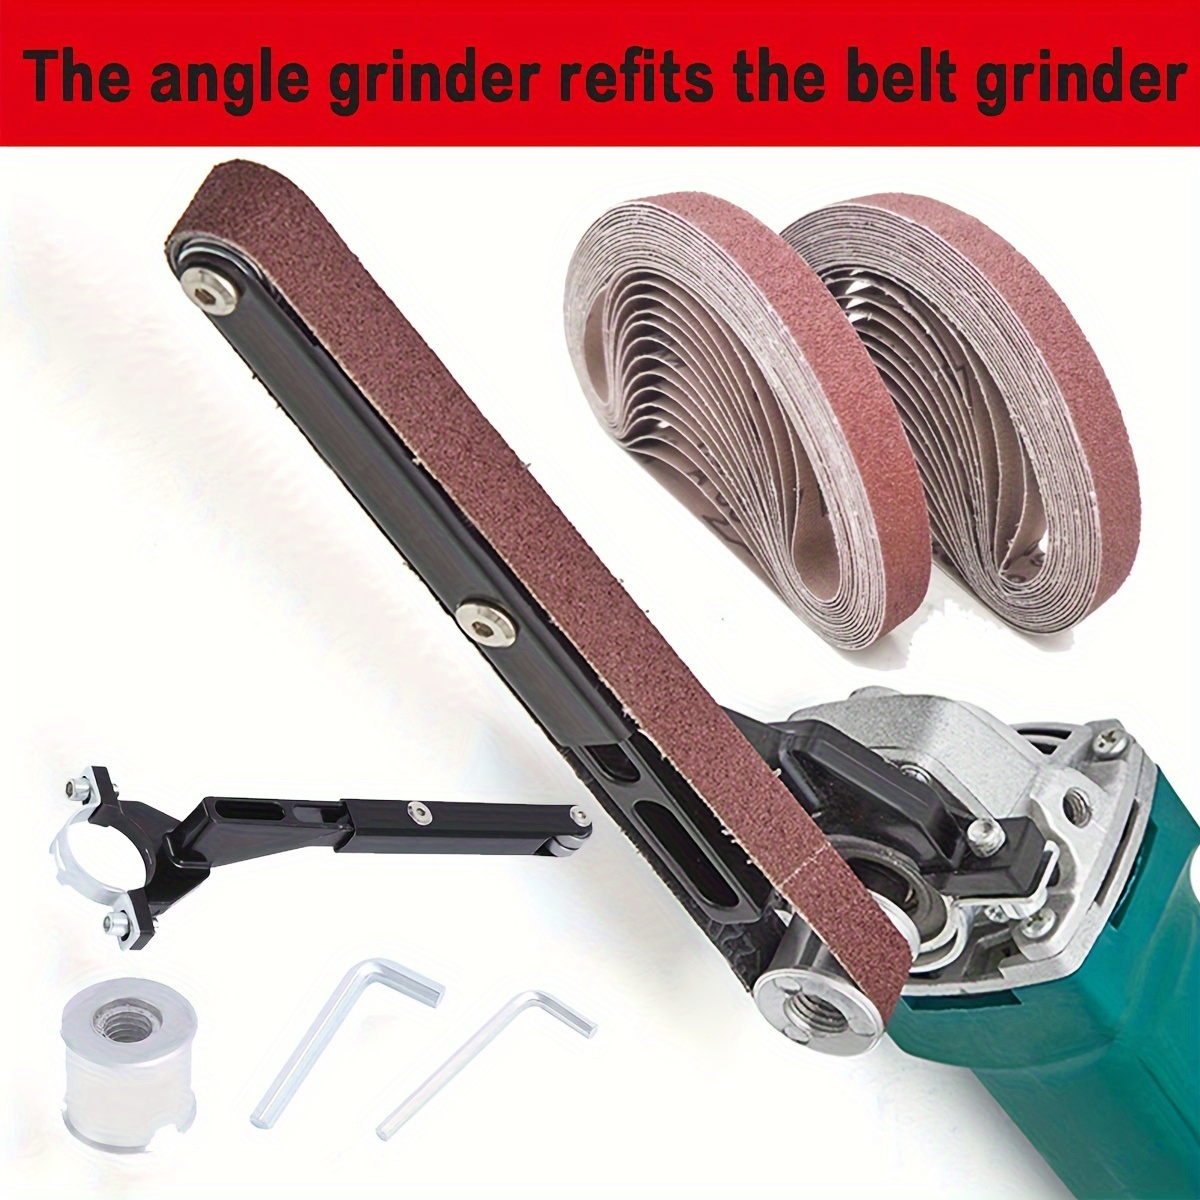 

1set Electric Belt Grinder Attachment For Angle Grinder, Metal Construction, Sand Belt Machine Converter For Pipe Sanding And Polishing, Suitable For Model 100/125, Includes 2 Sanding Belts